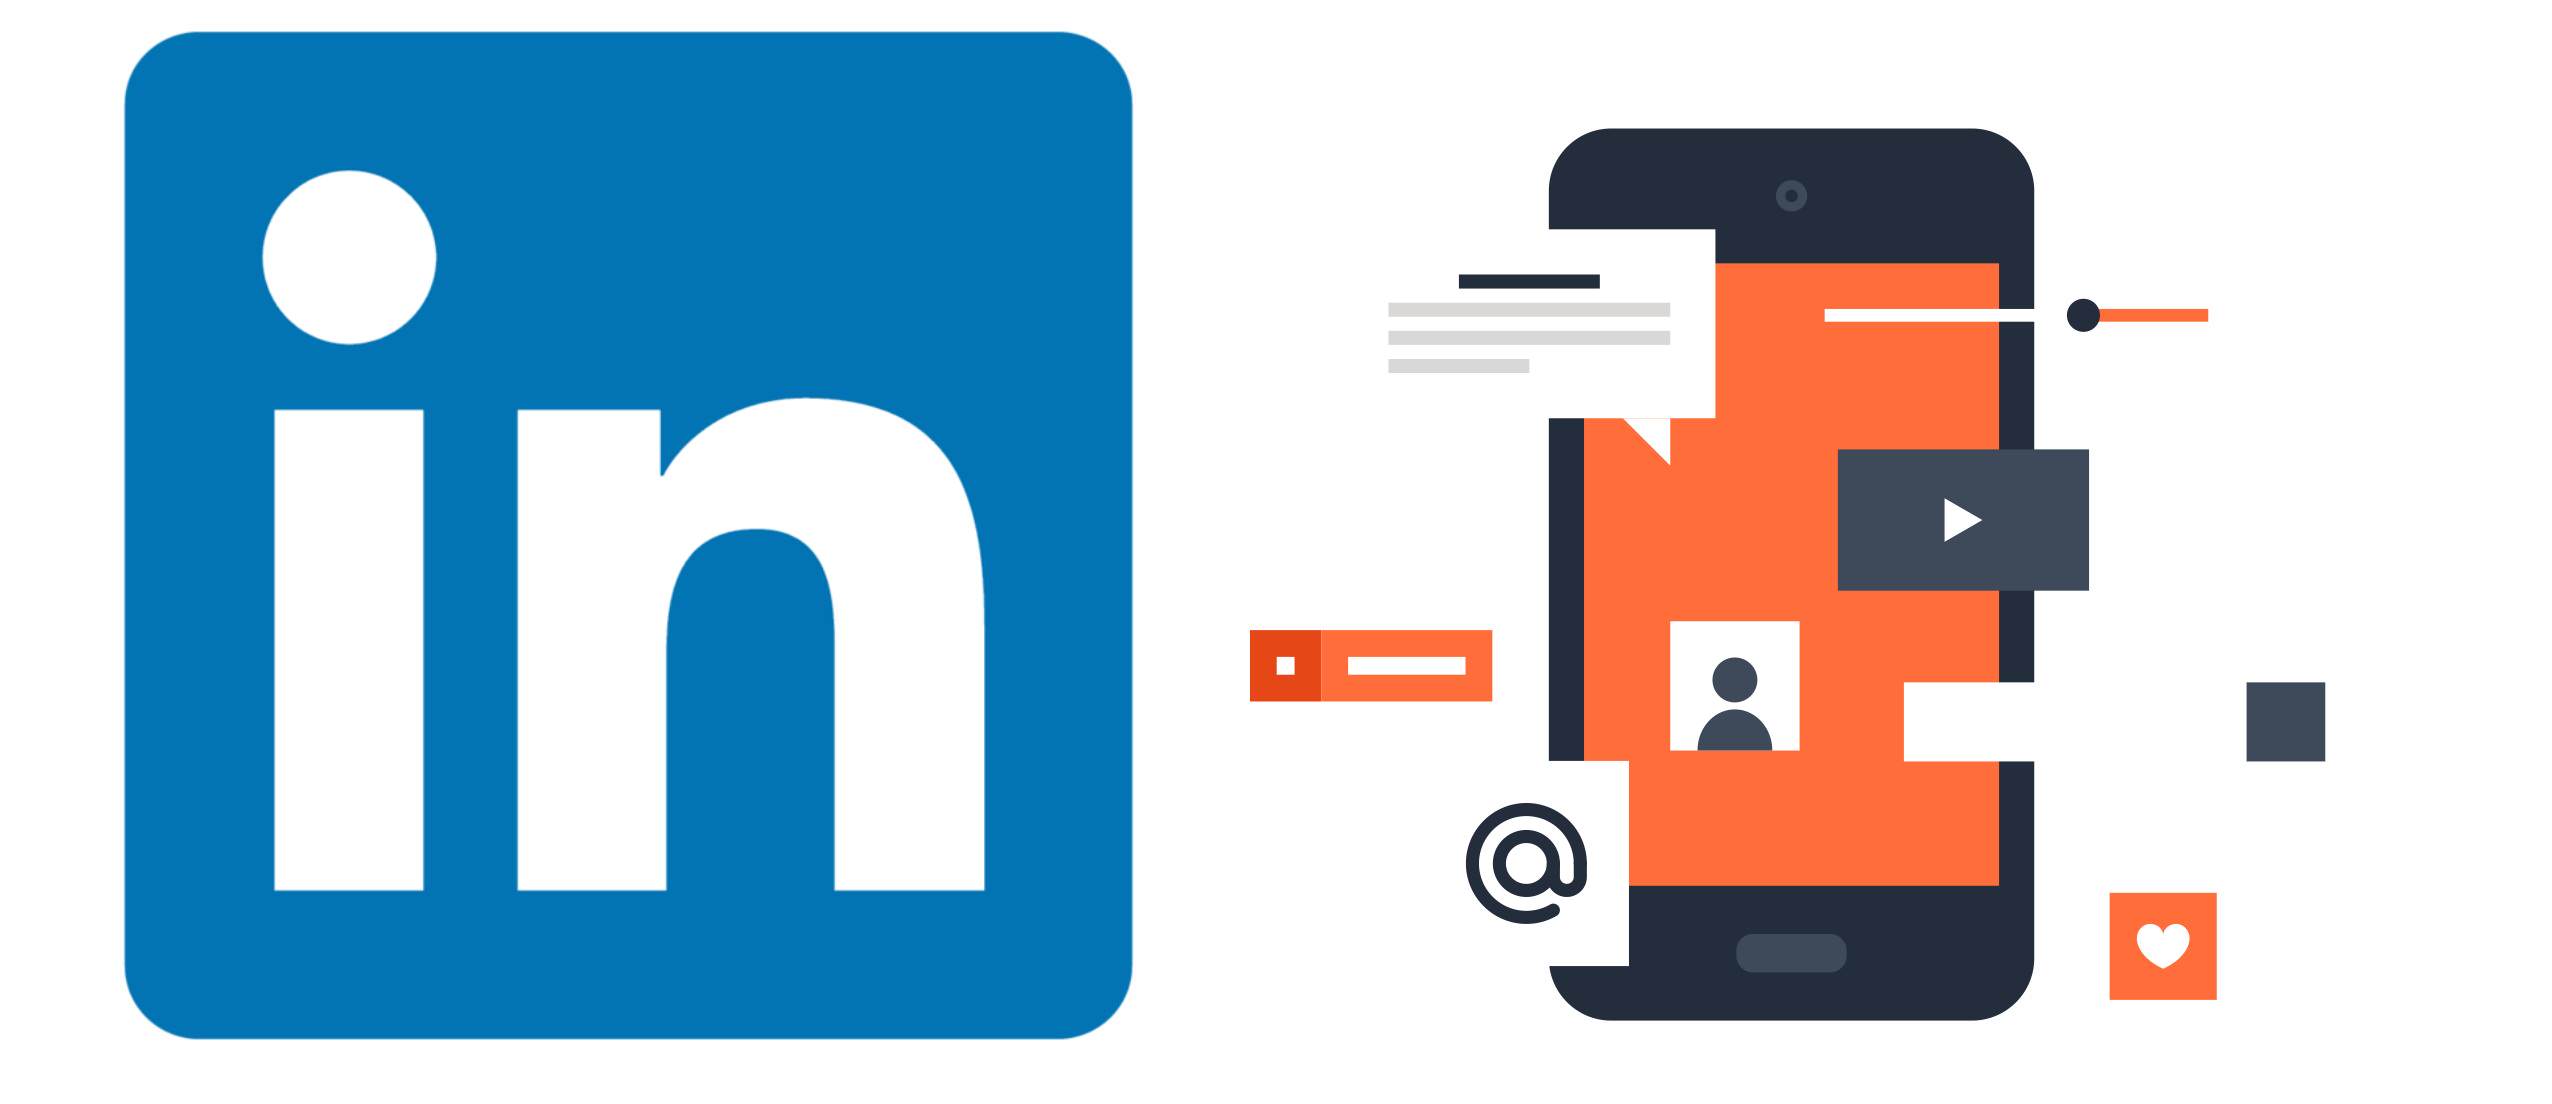 New LinkedIn Logo - New LinkedIn Mobile Interface Falls Flat For Event Professionals